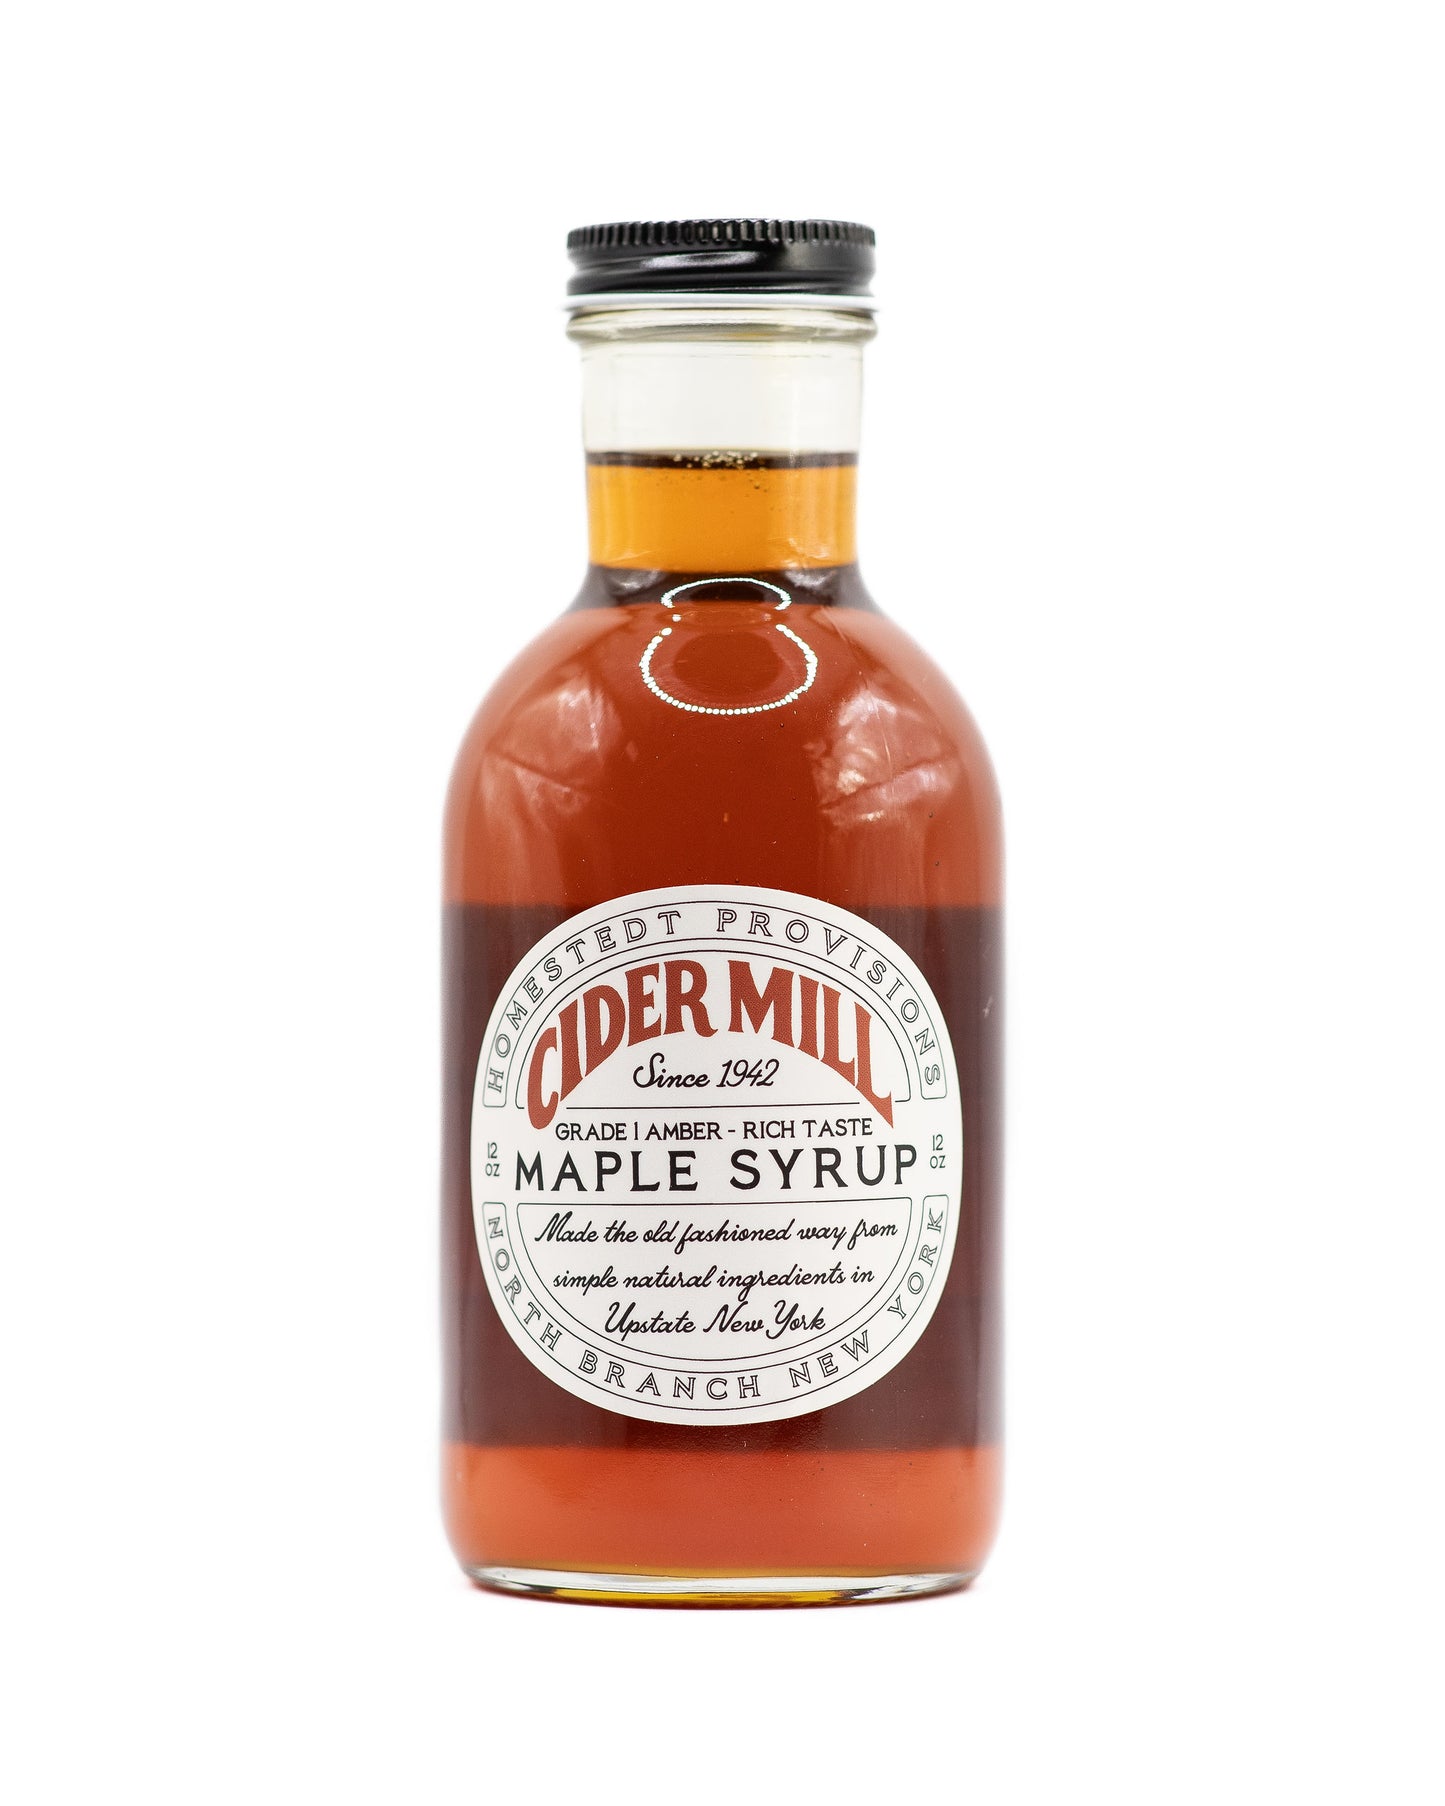 Cider Mill Maple Syrup Grade 1 Amber